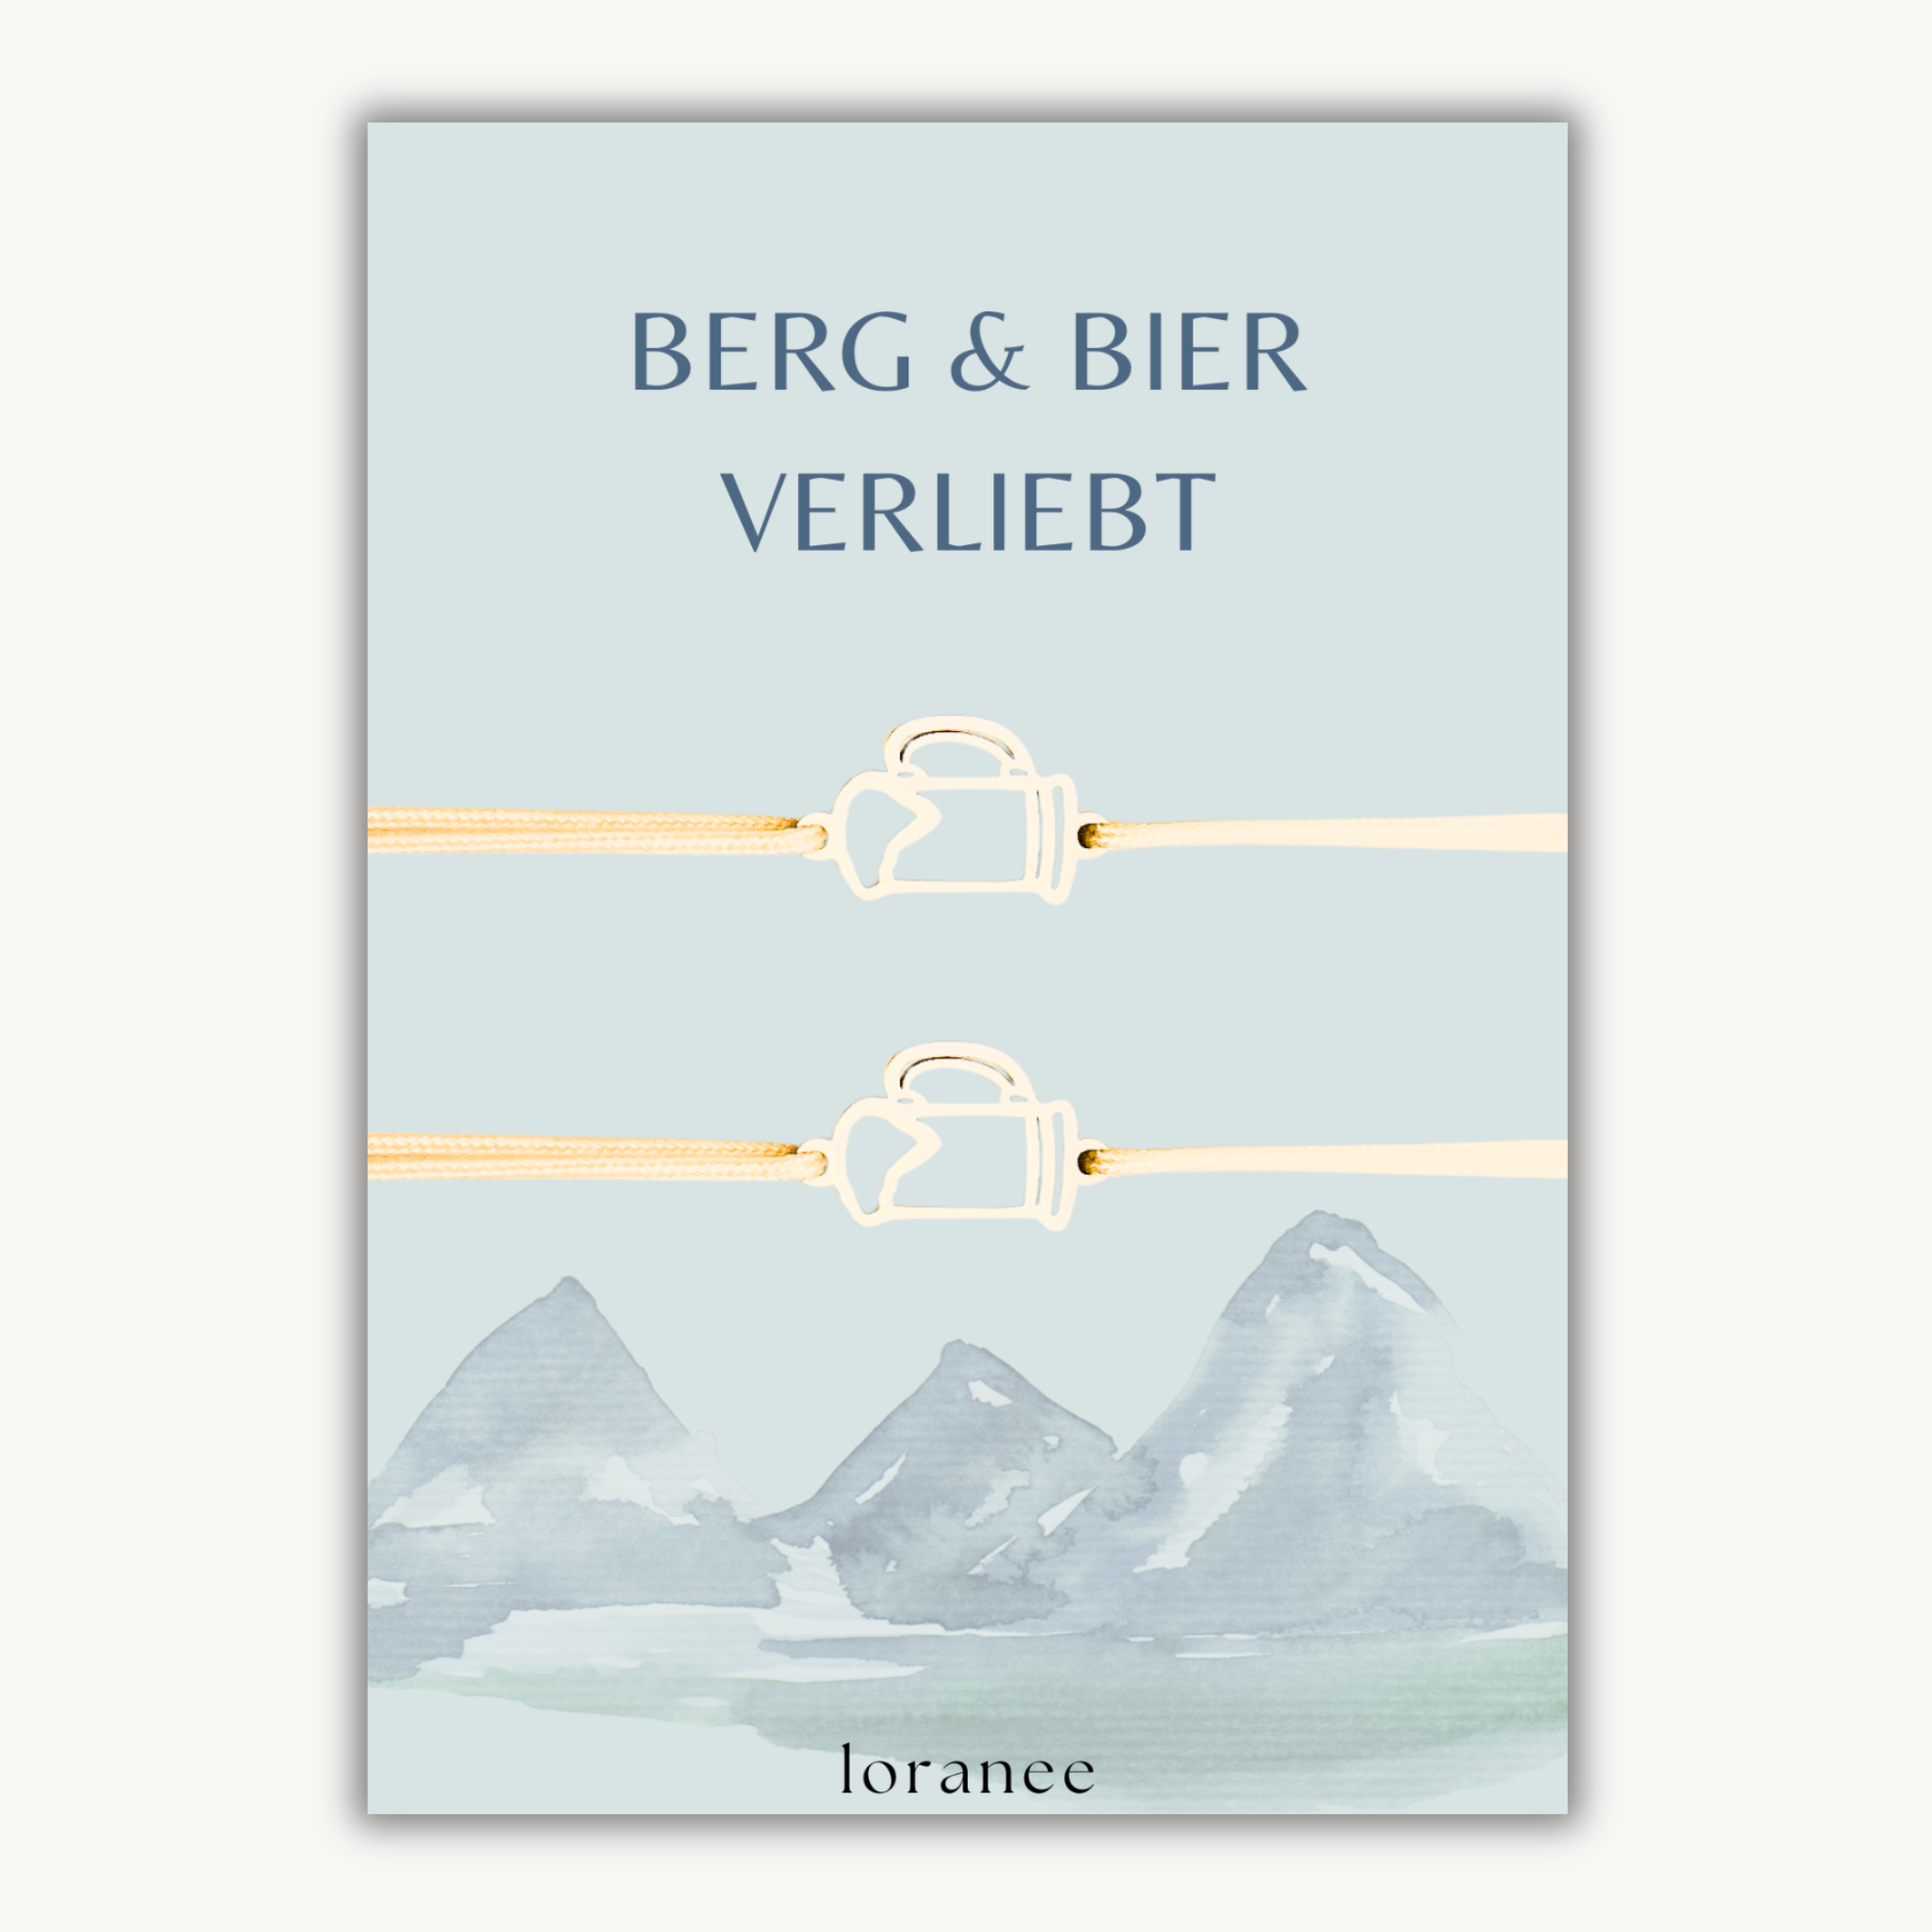 BERG & BIER VERLIEBT